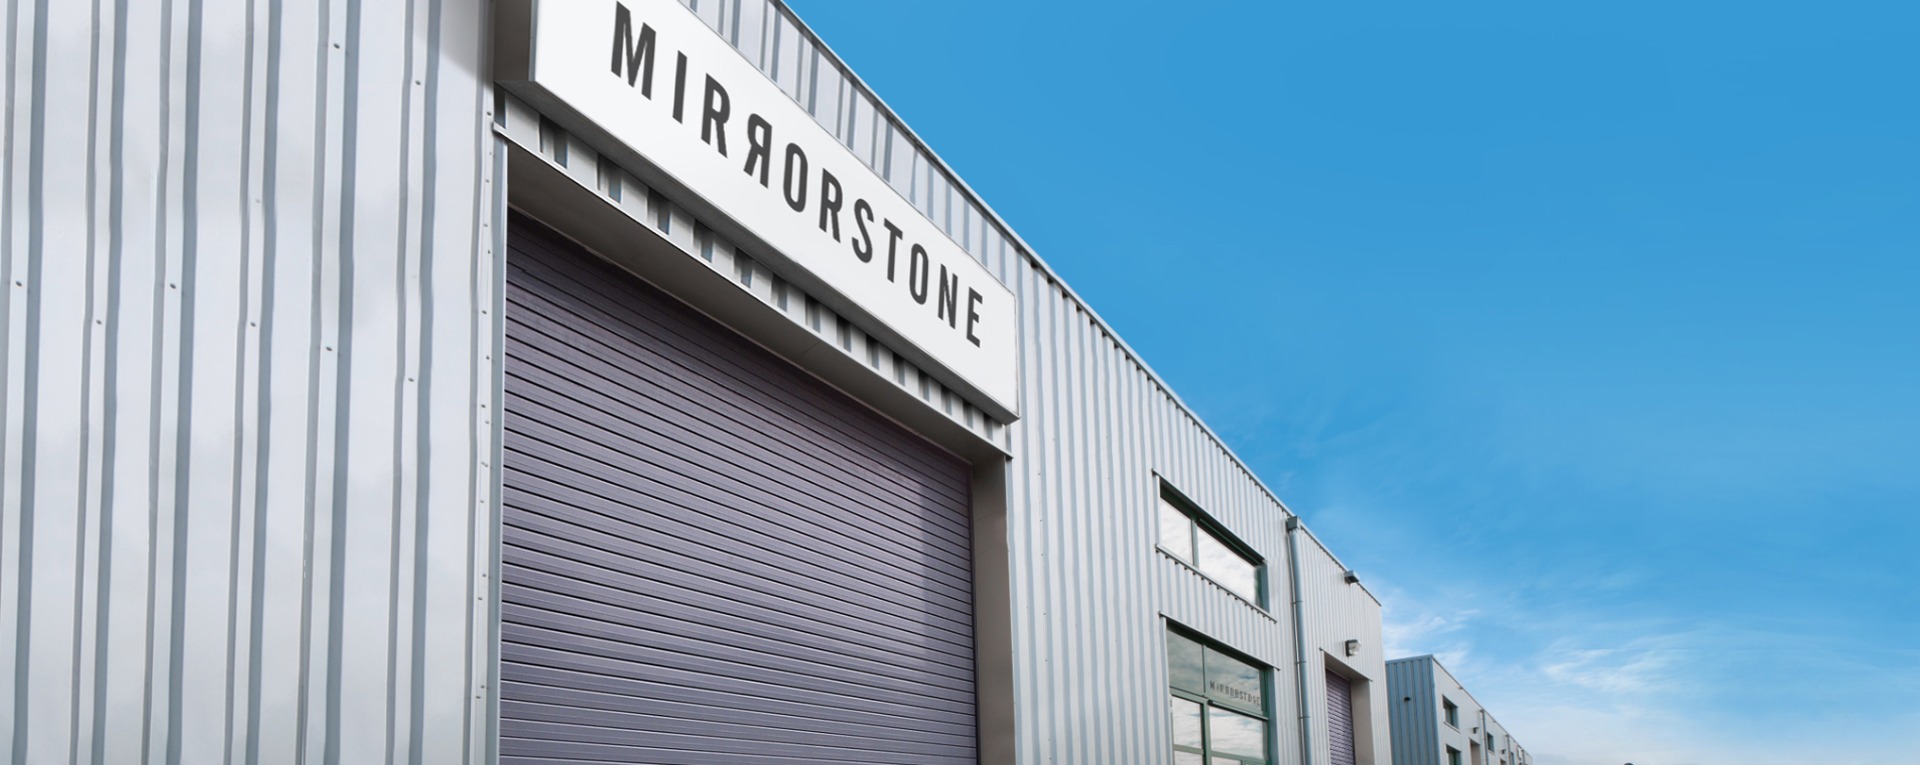 Mirrorstone Warehouse